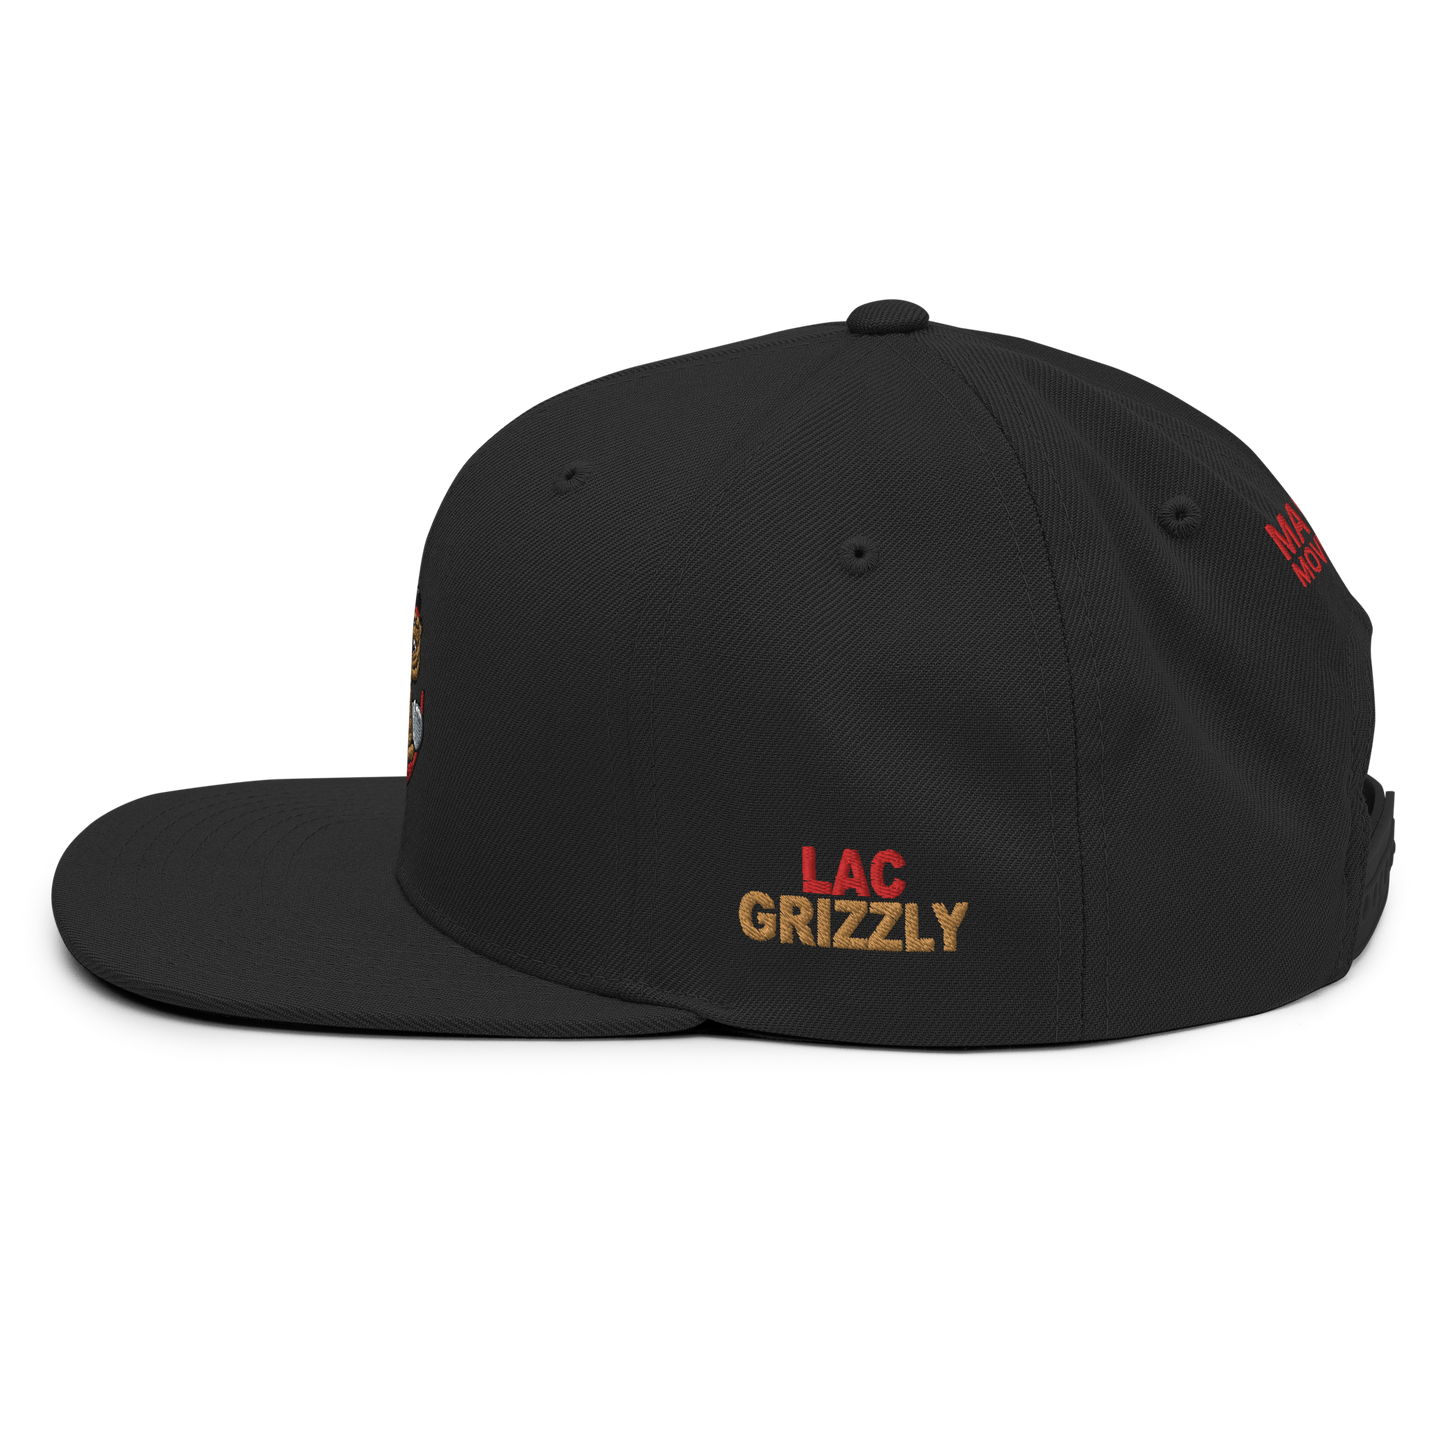 Mavrix Lac Grizzly Snapback (2 colors)